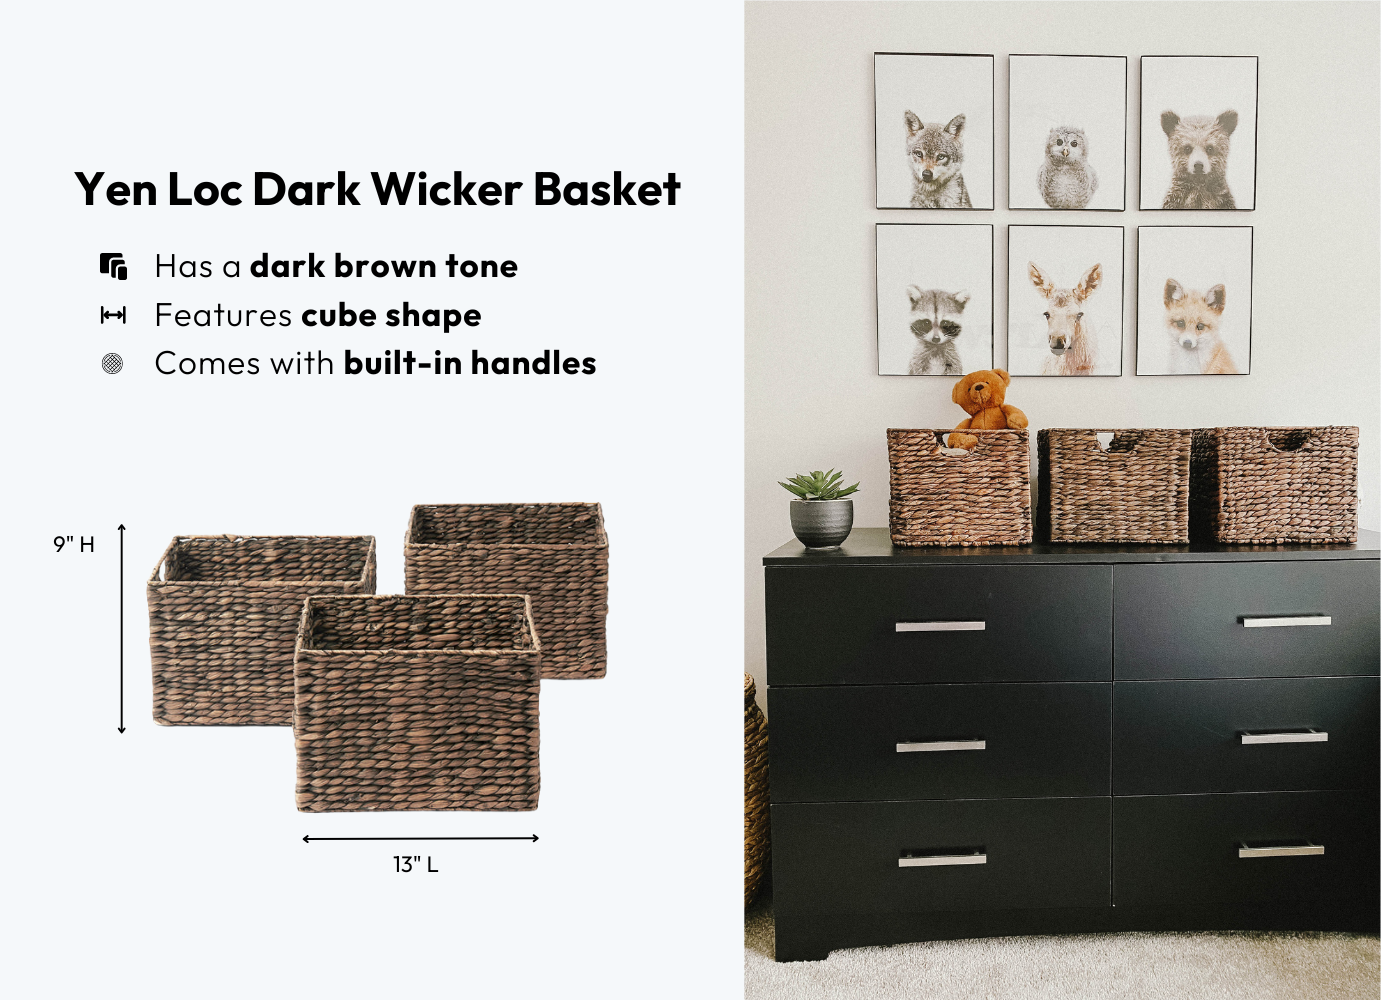 Yen Loc dark wicker basket